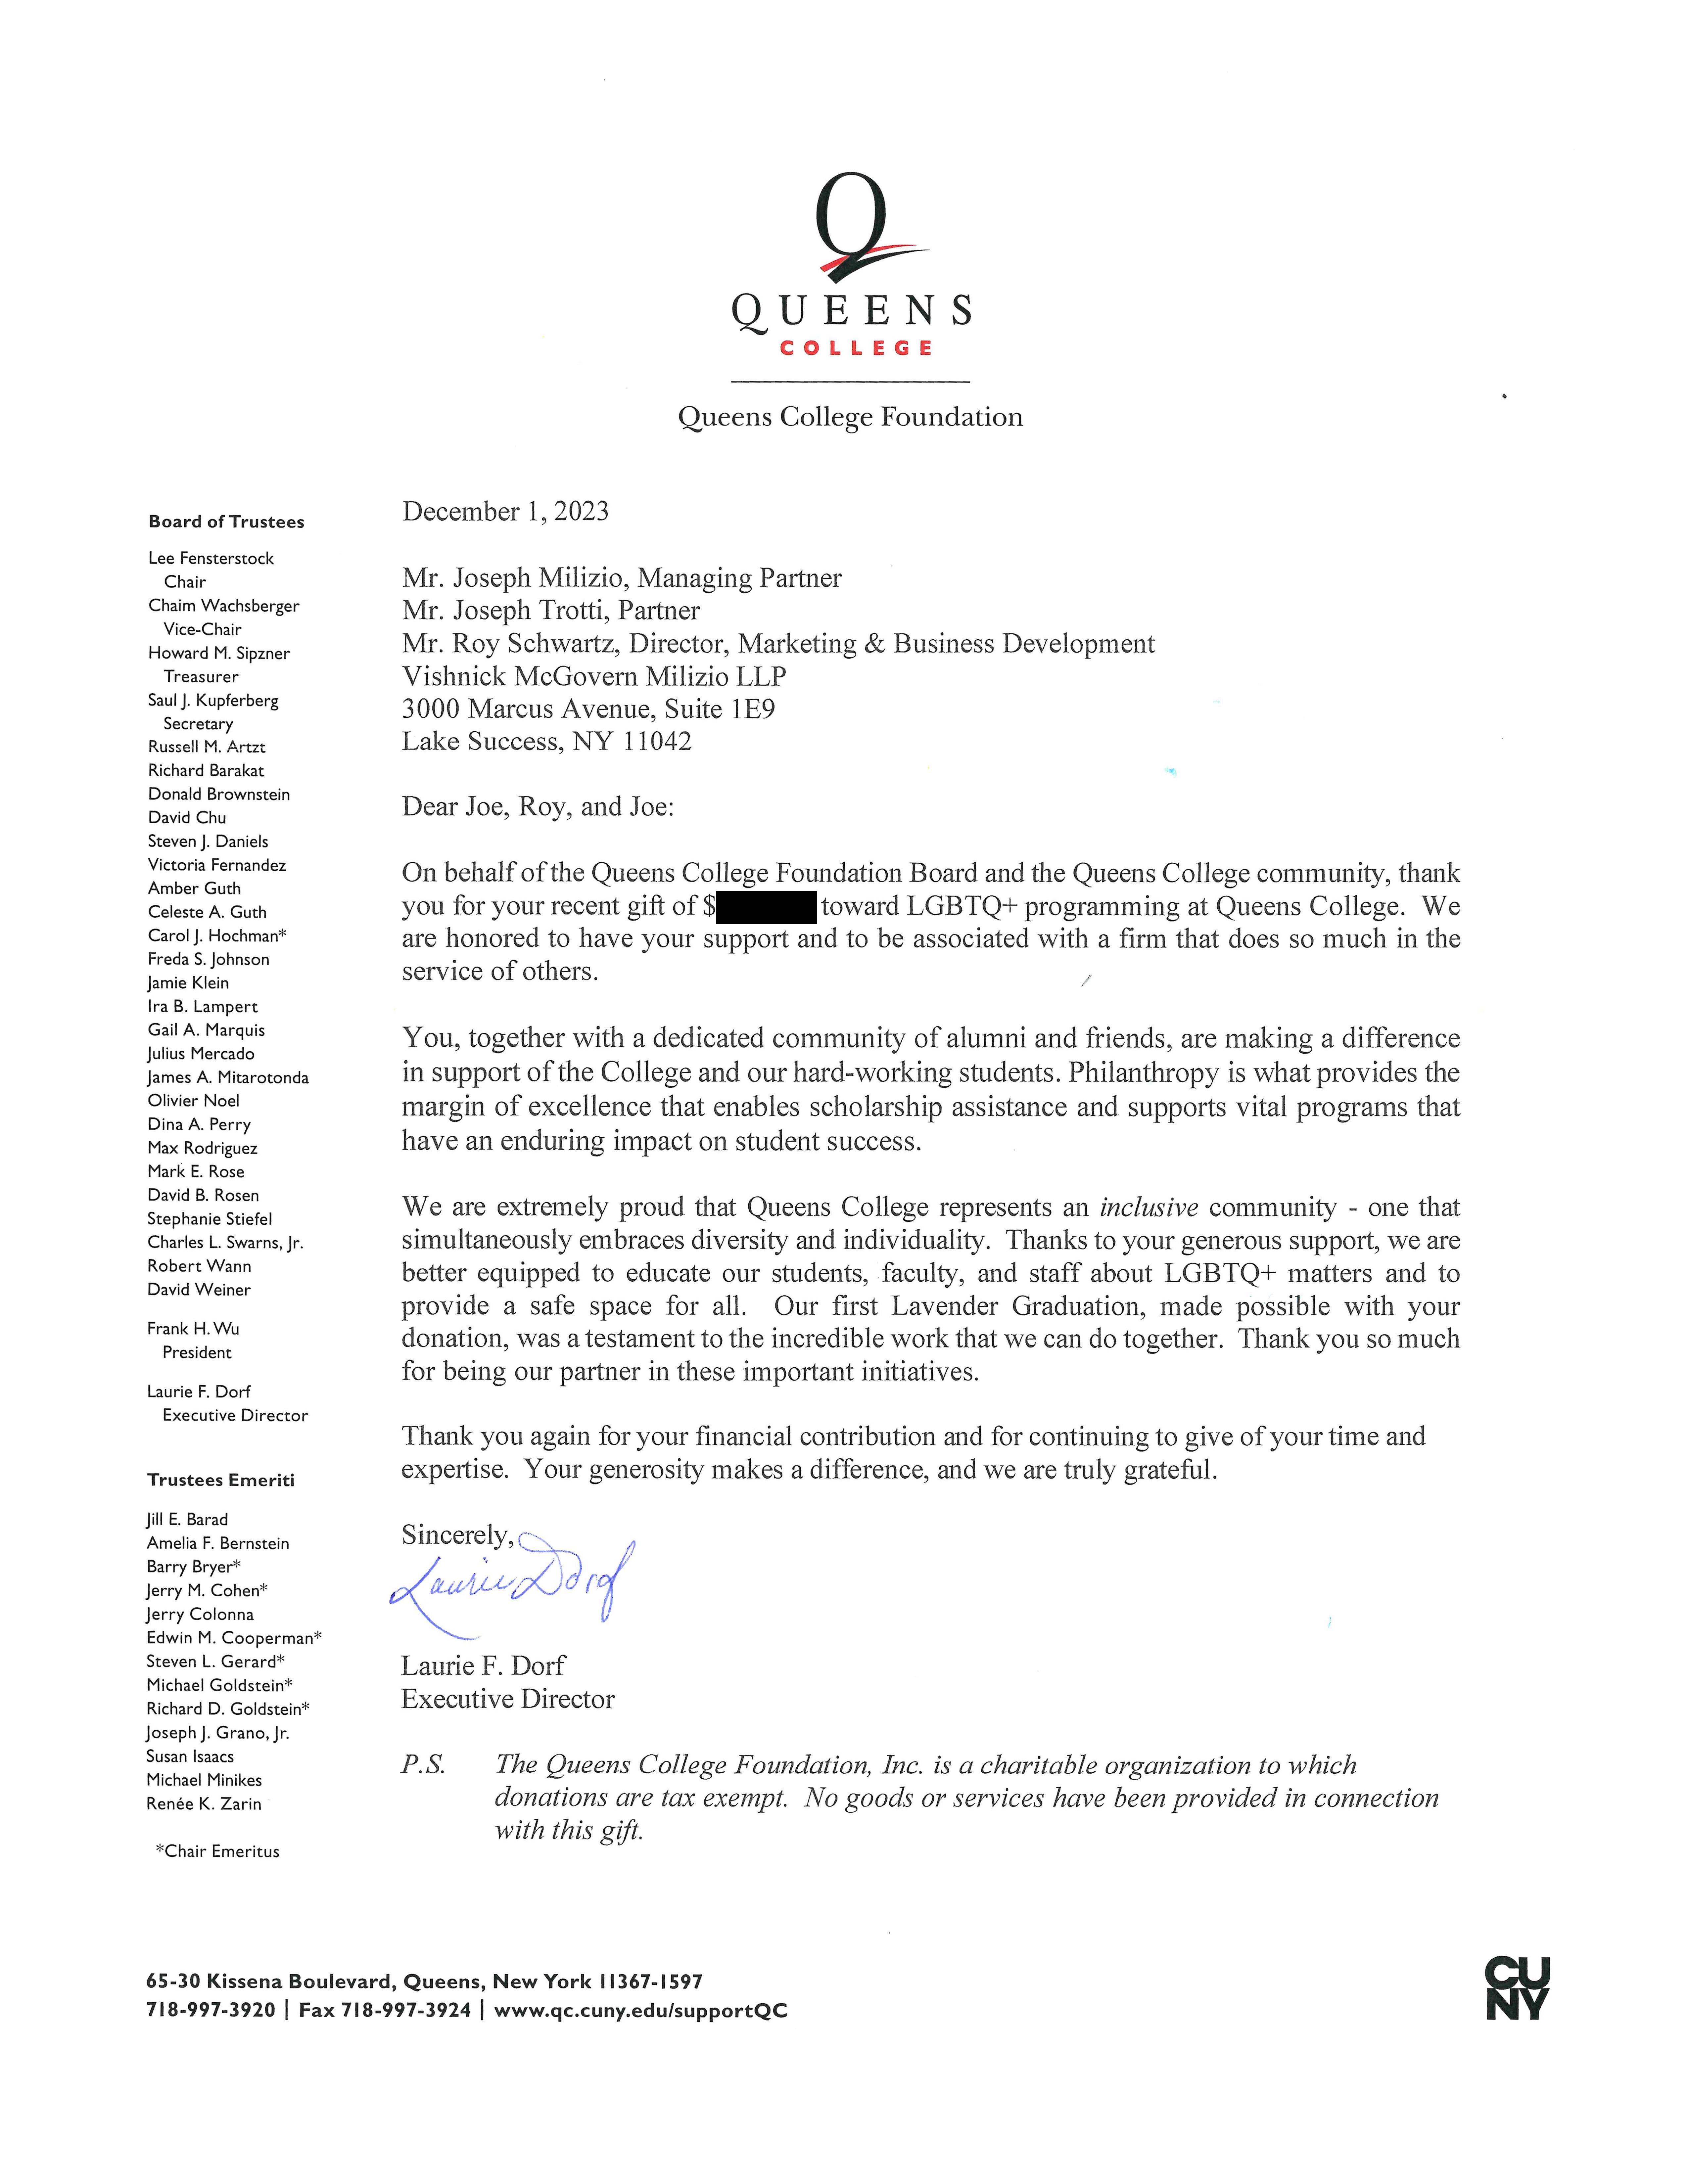 Queens College Letter